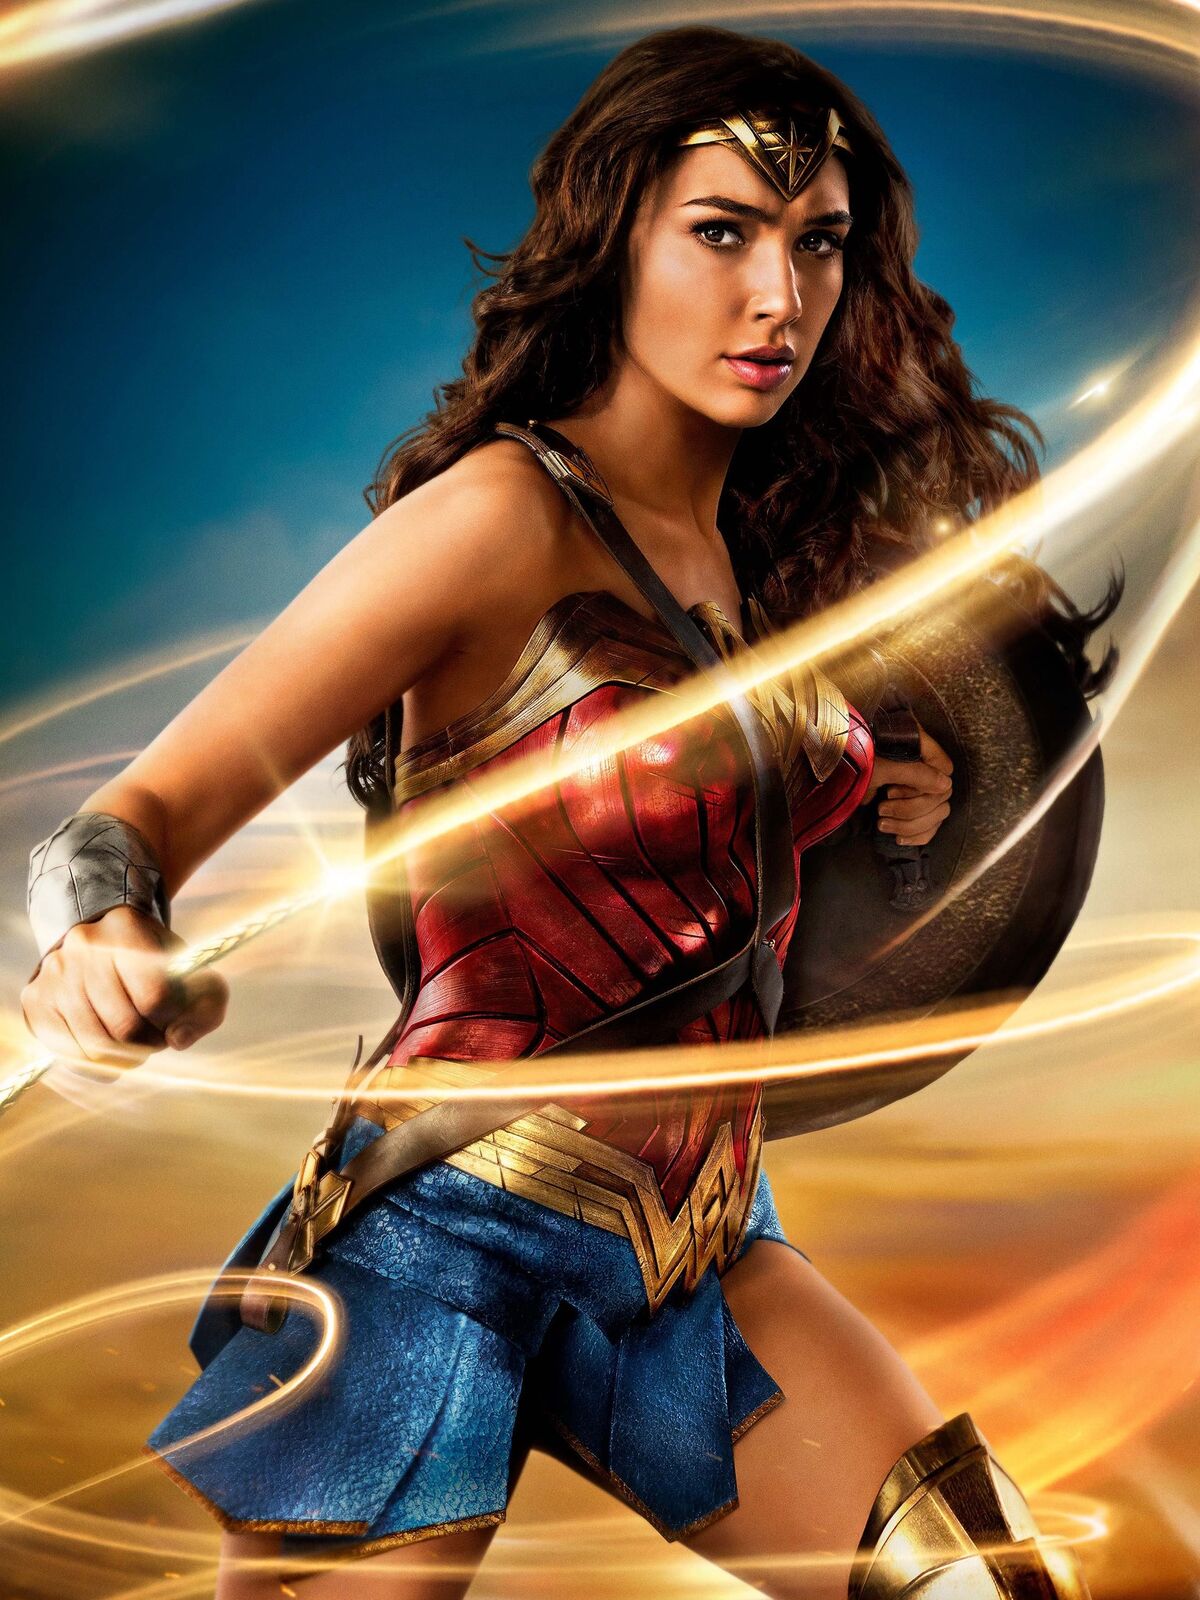 Wonder Woman, DC Extended Universe Wiki